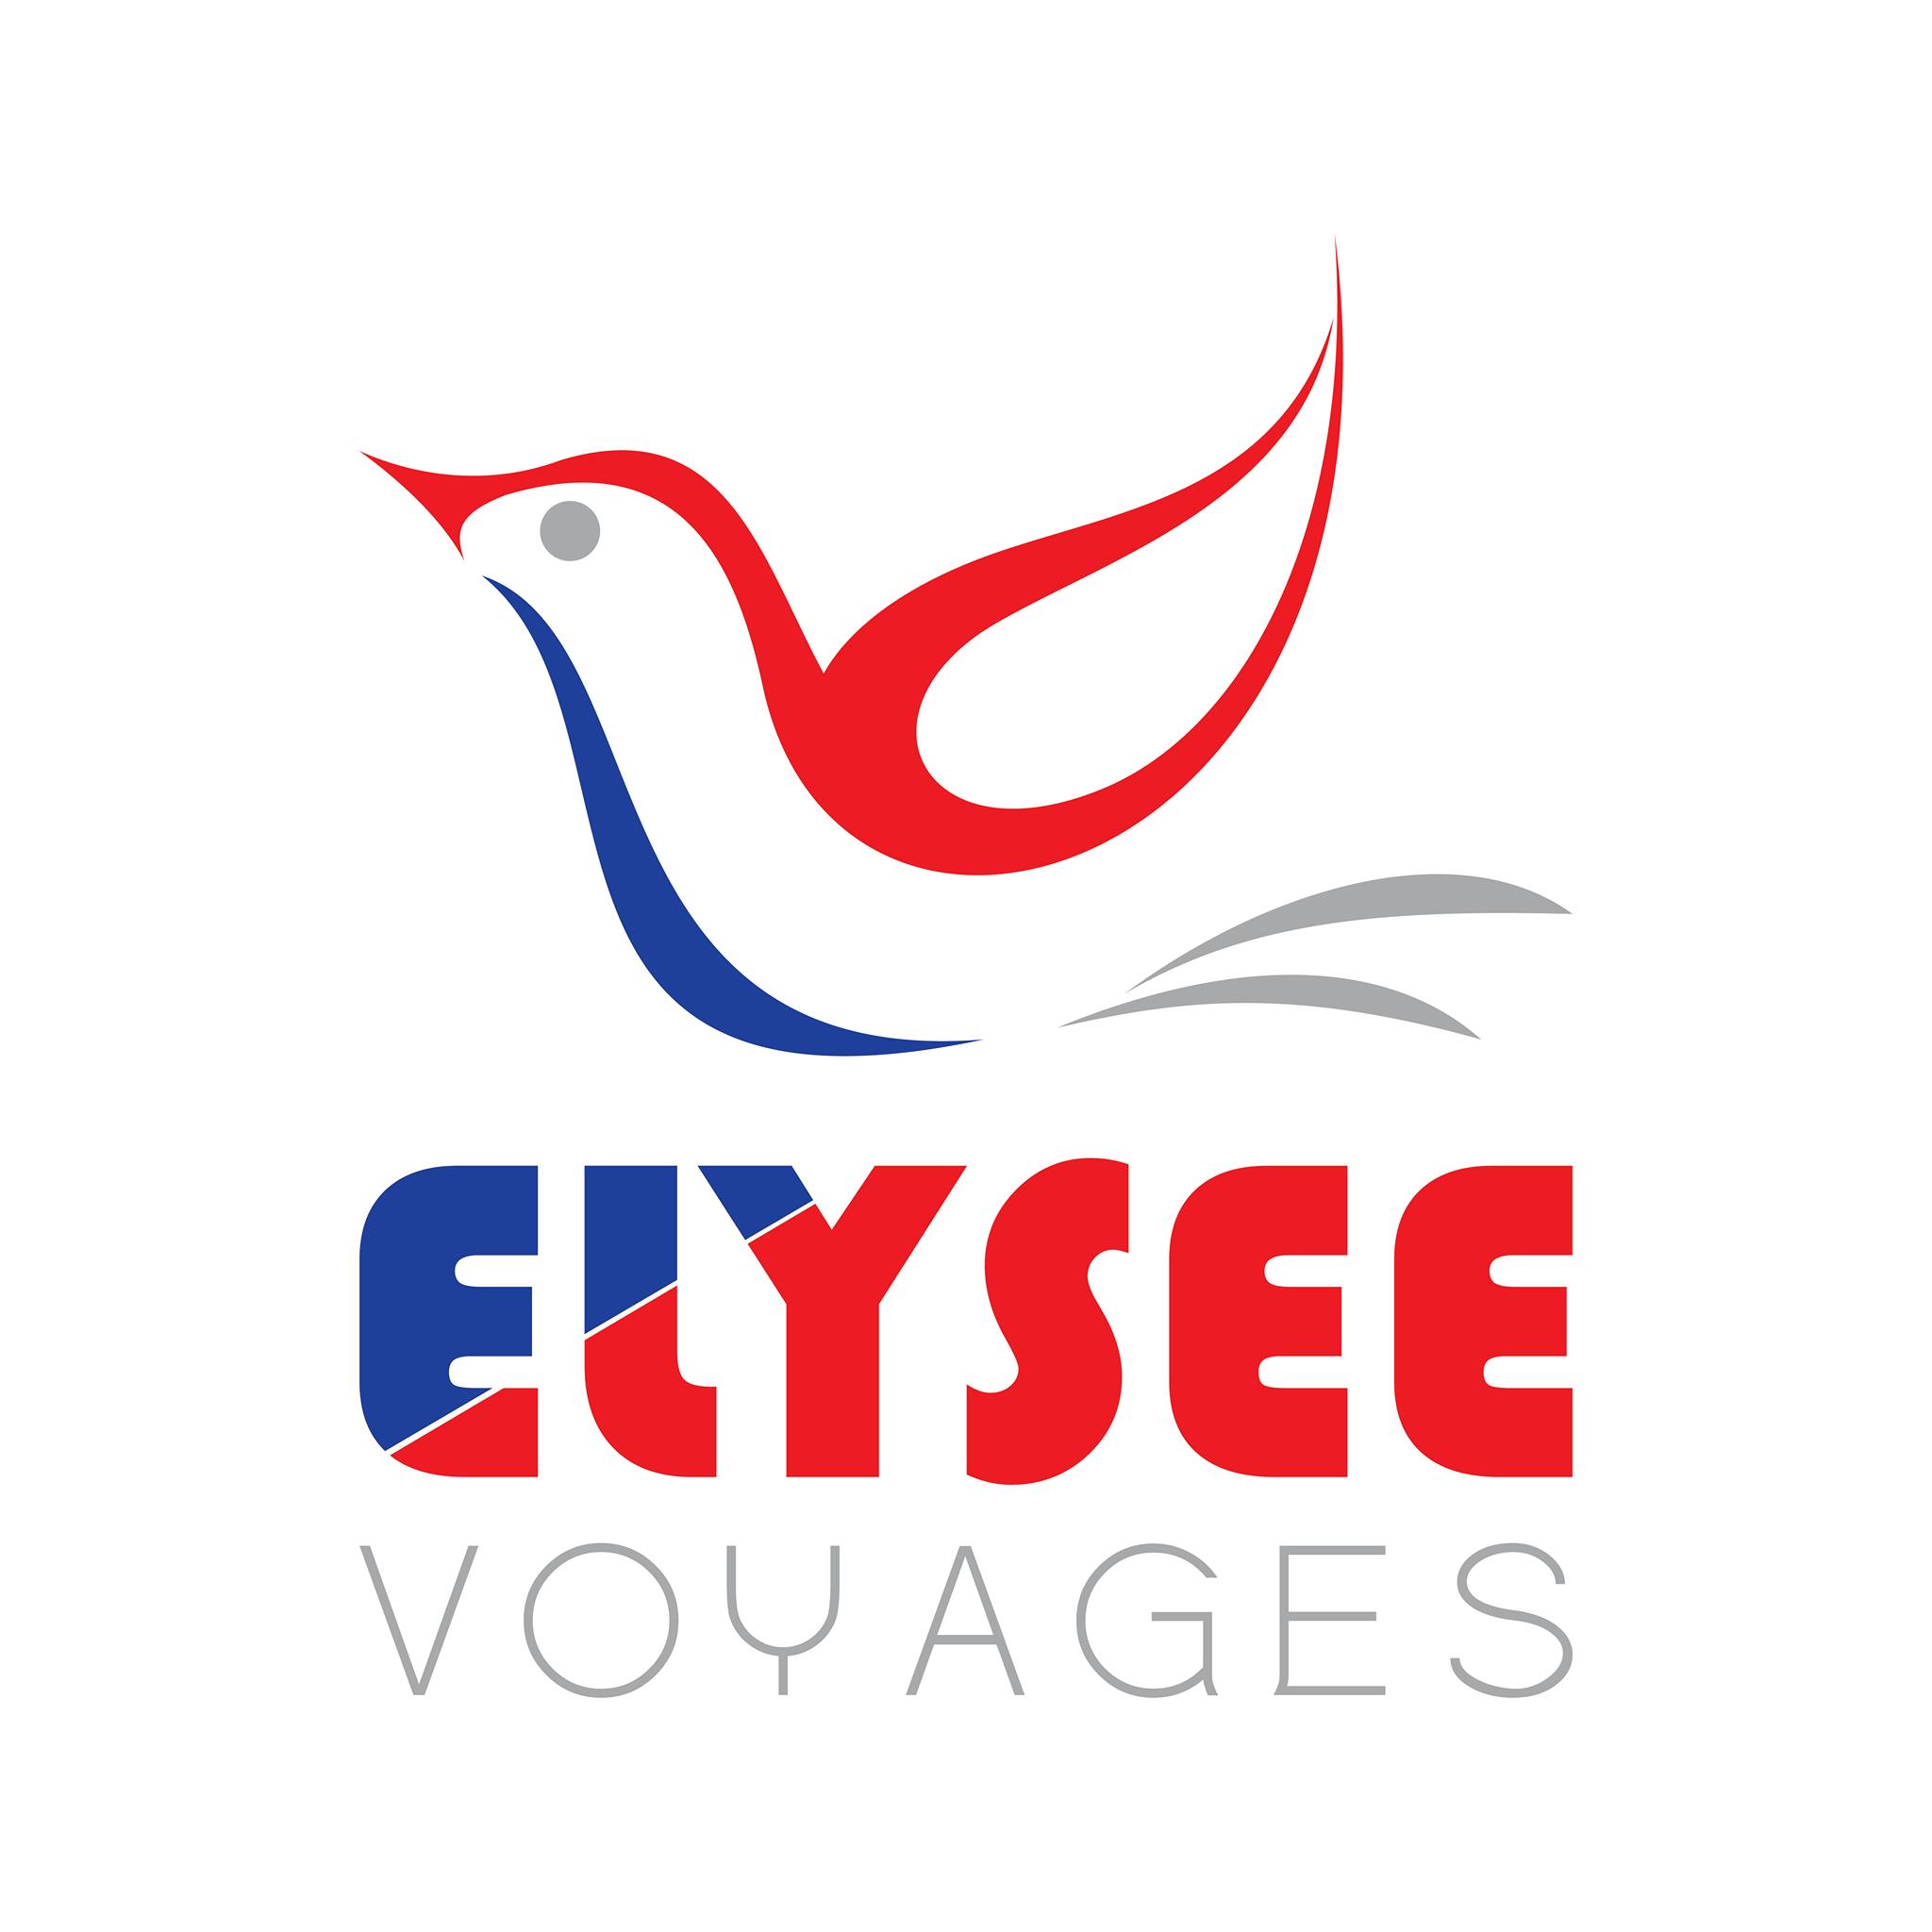 Elysée Voyages 